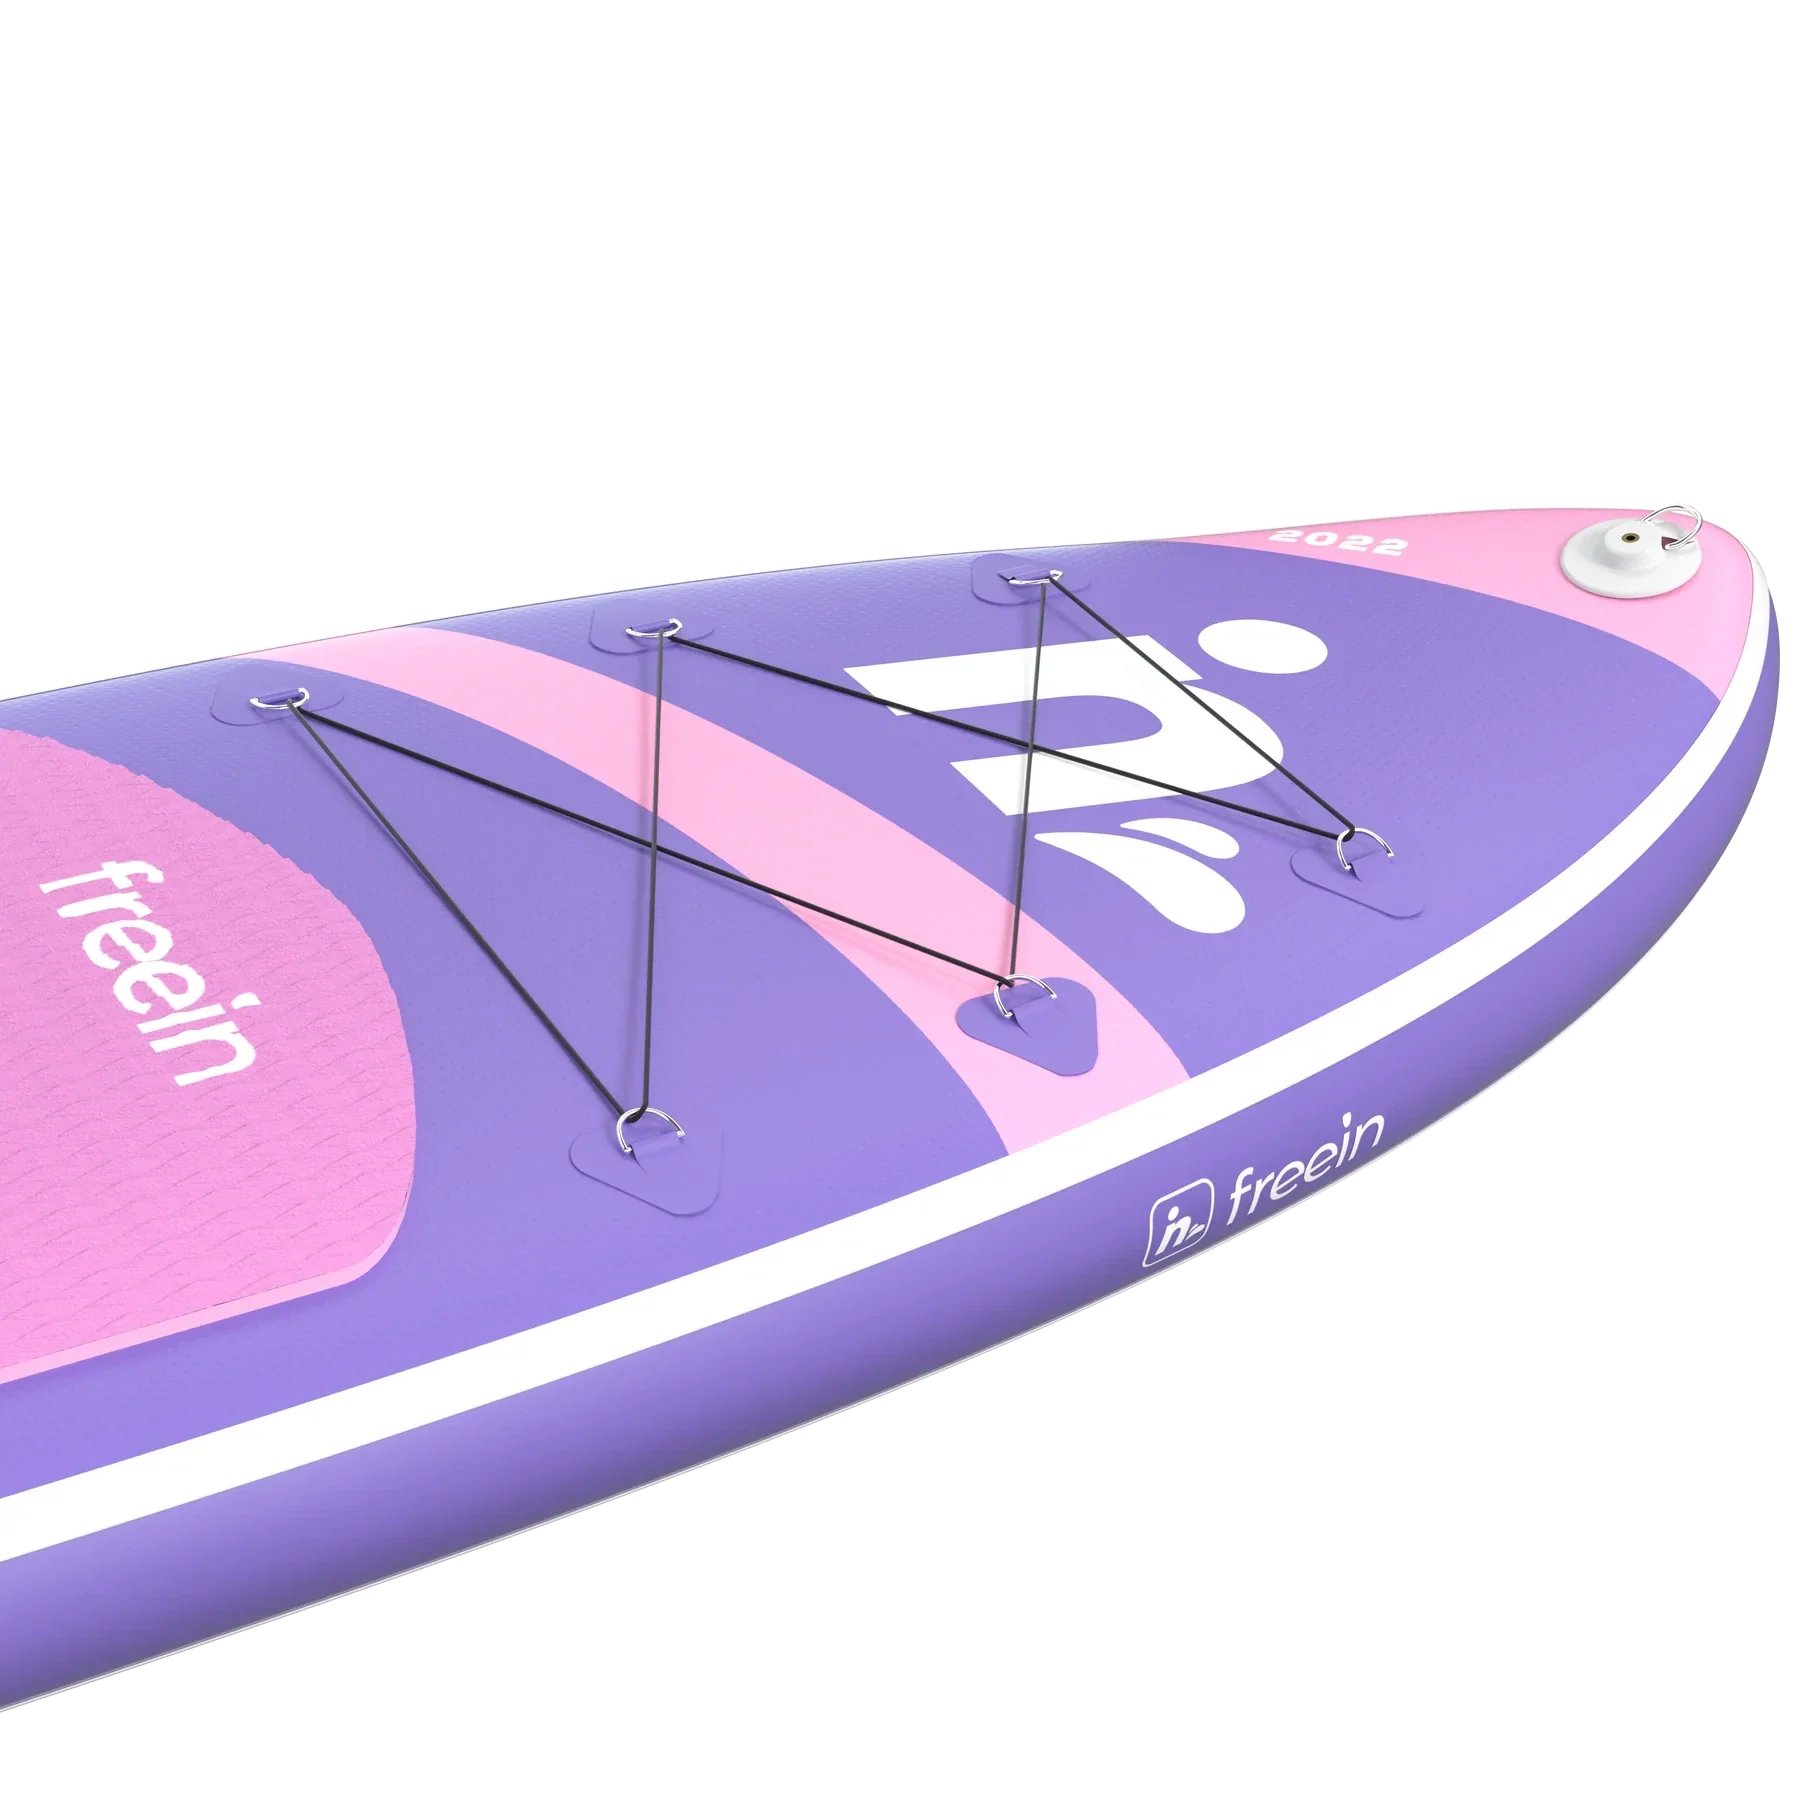 Freein 10'6 Inflatable Kayak SUP Pro